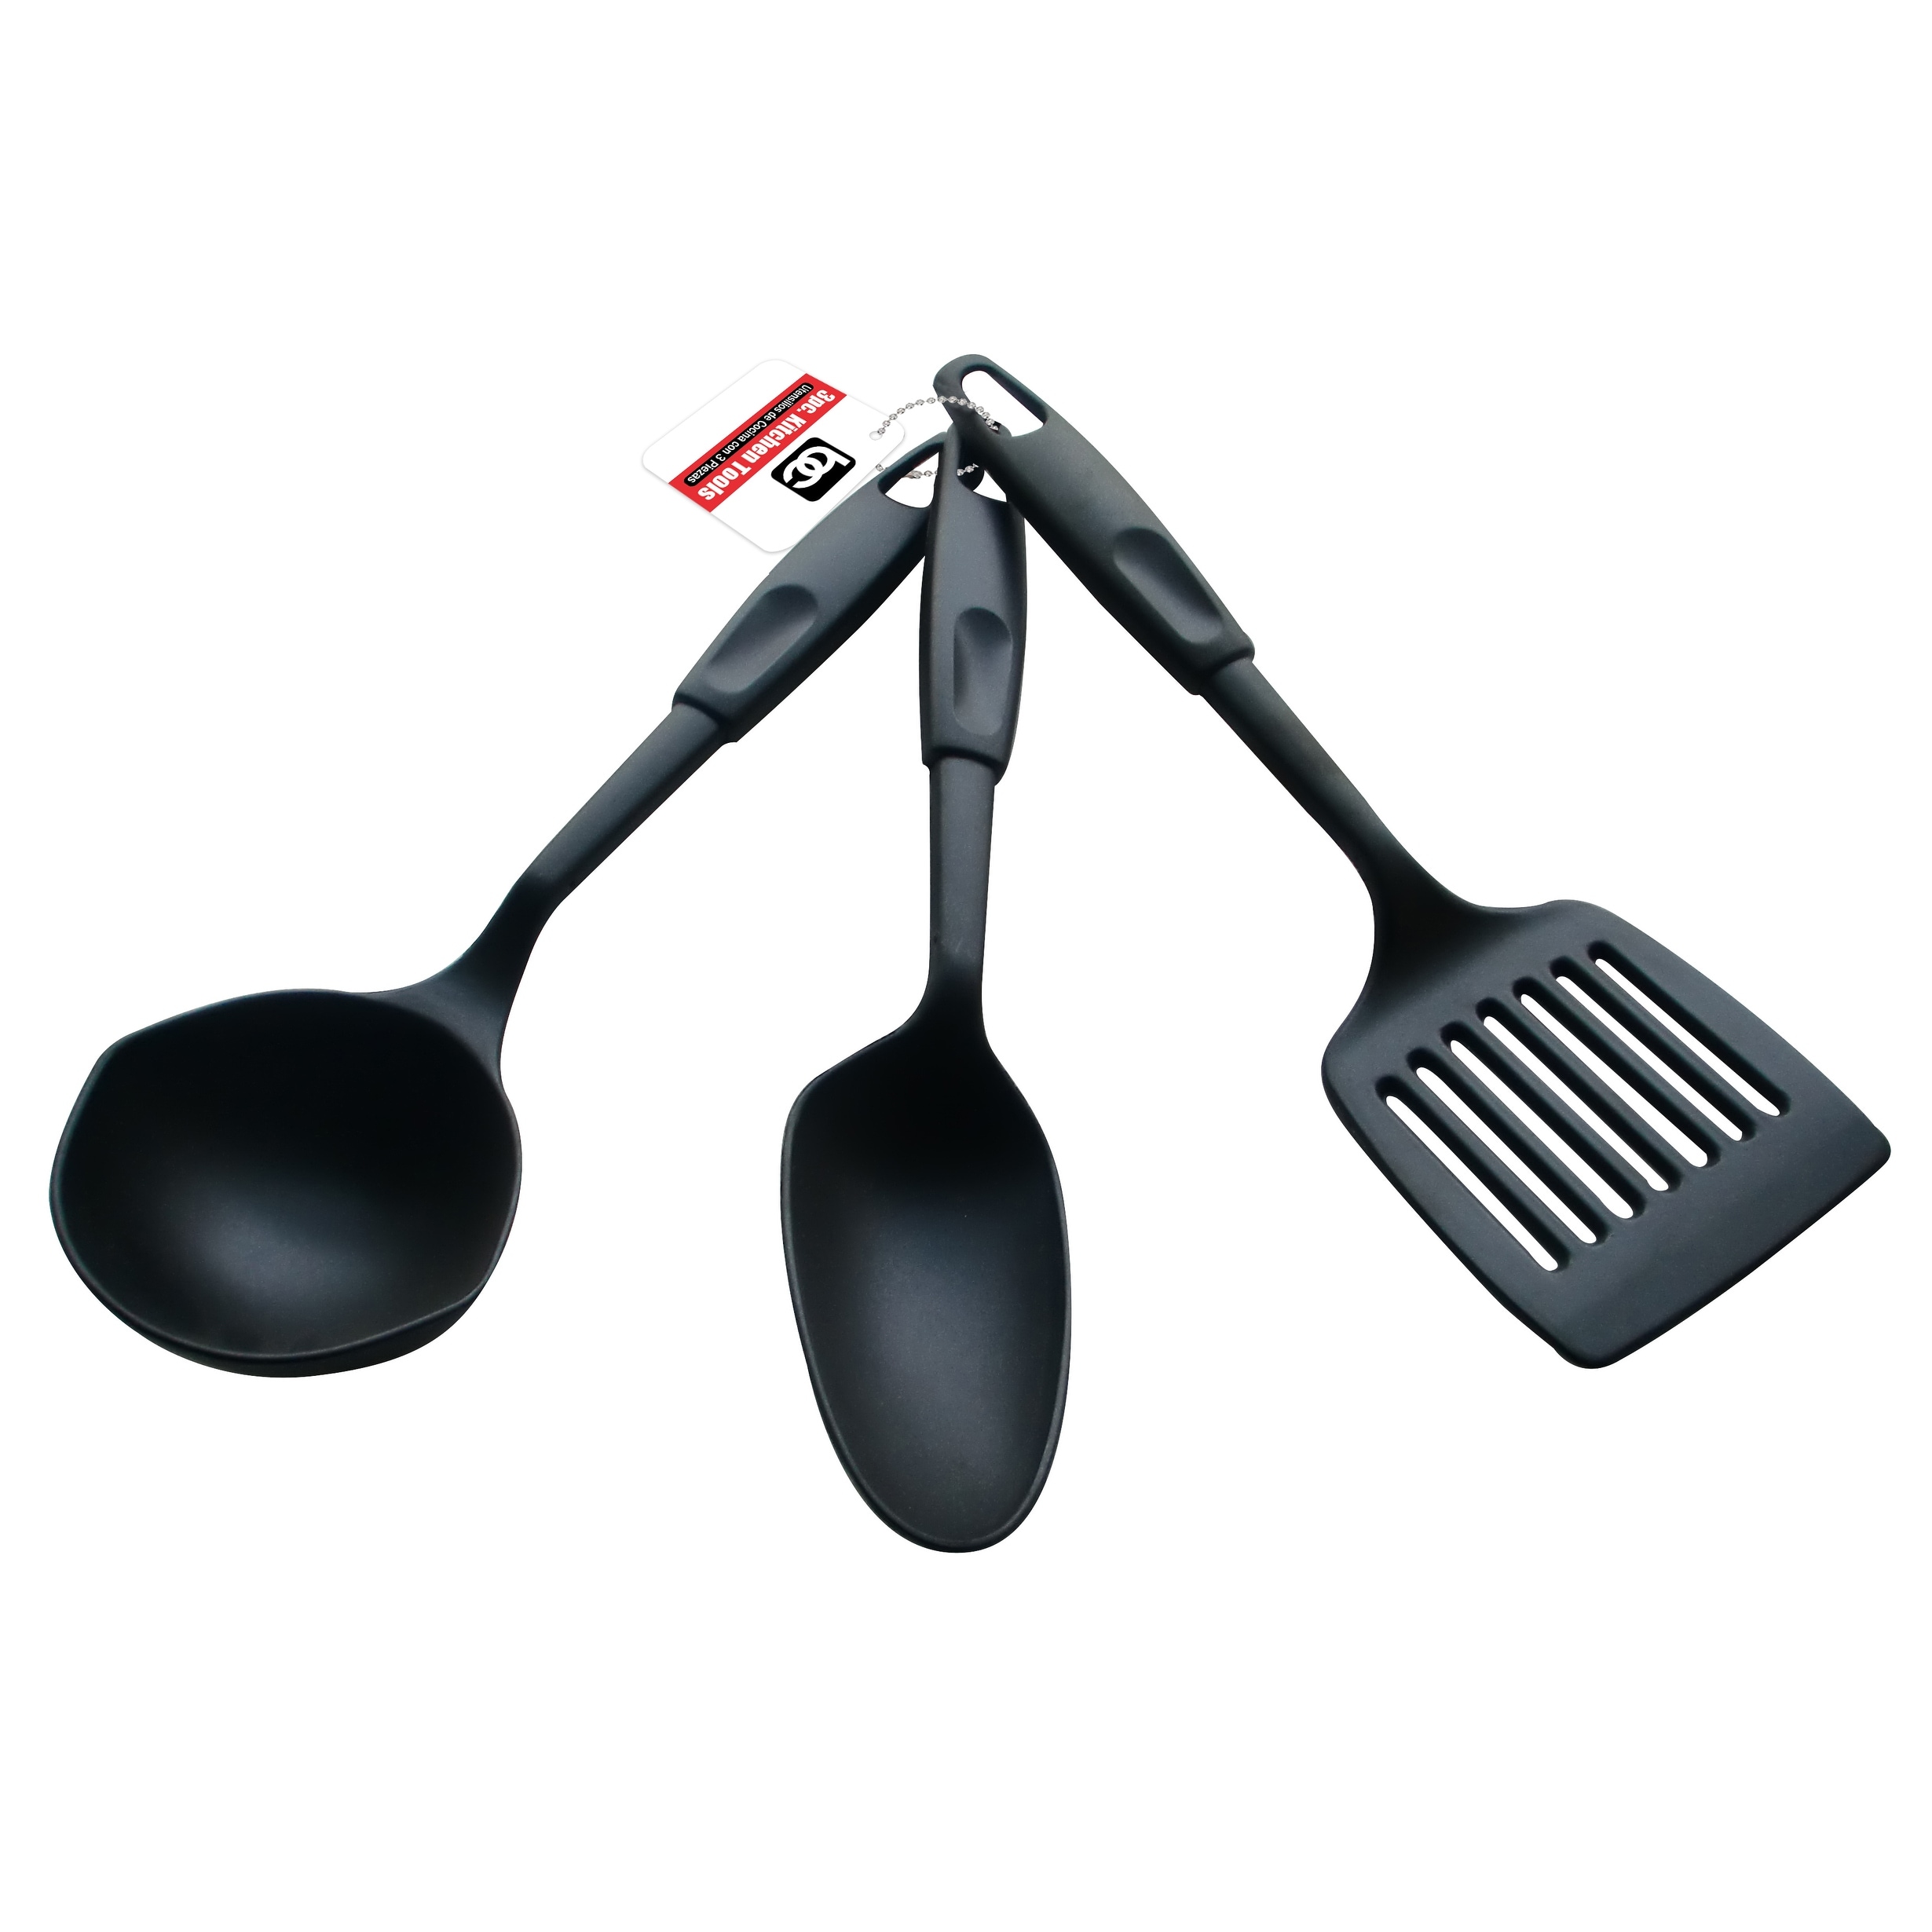 https://ak1.ostkcdn.com/images/products/is/images/direct/7a69c00aa1c16005d04de2be6aa9d3d7d89f6877/Bene-Casa-3-piece-nylon-kitchen-utensil-set%2C-ladle%2C-spoon%2C-slotted-turner%2C-black%2C-scratch-resistant%2C.jpg